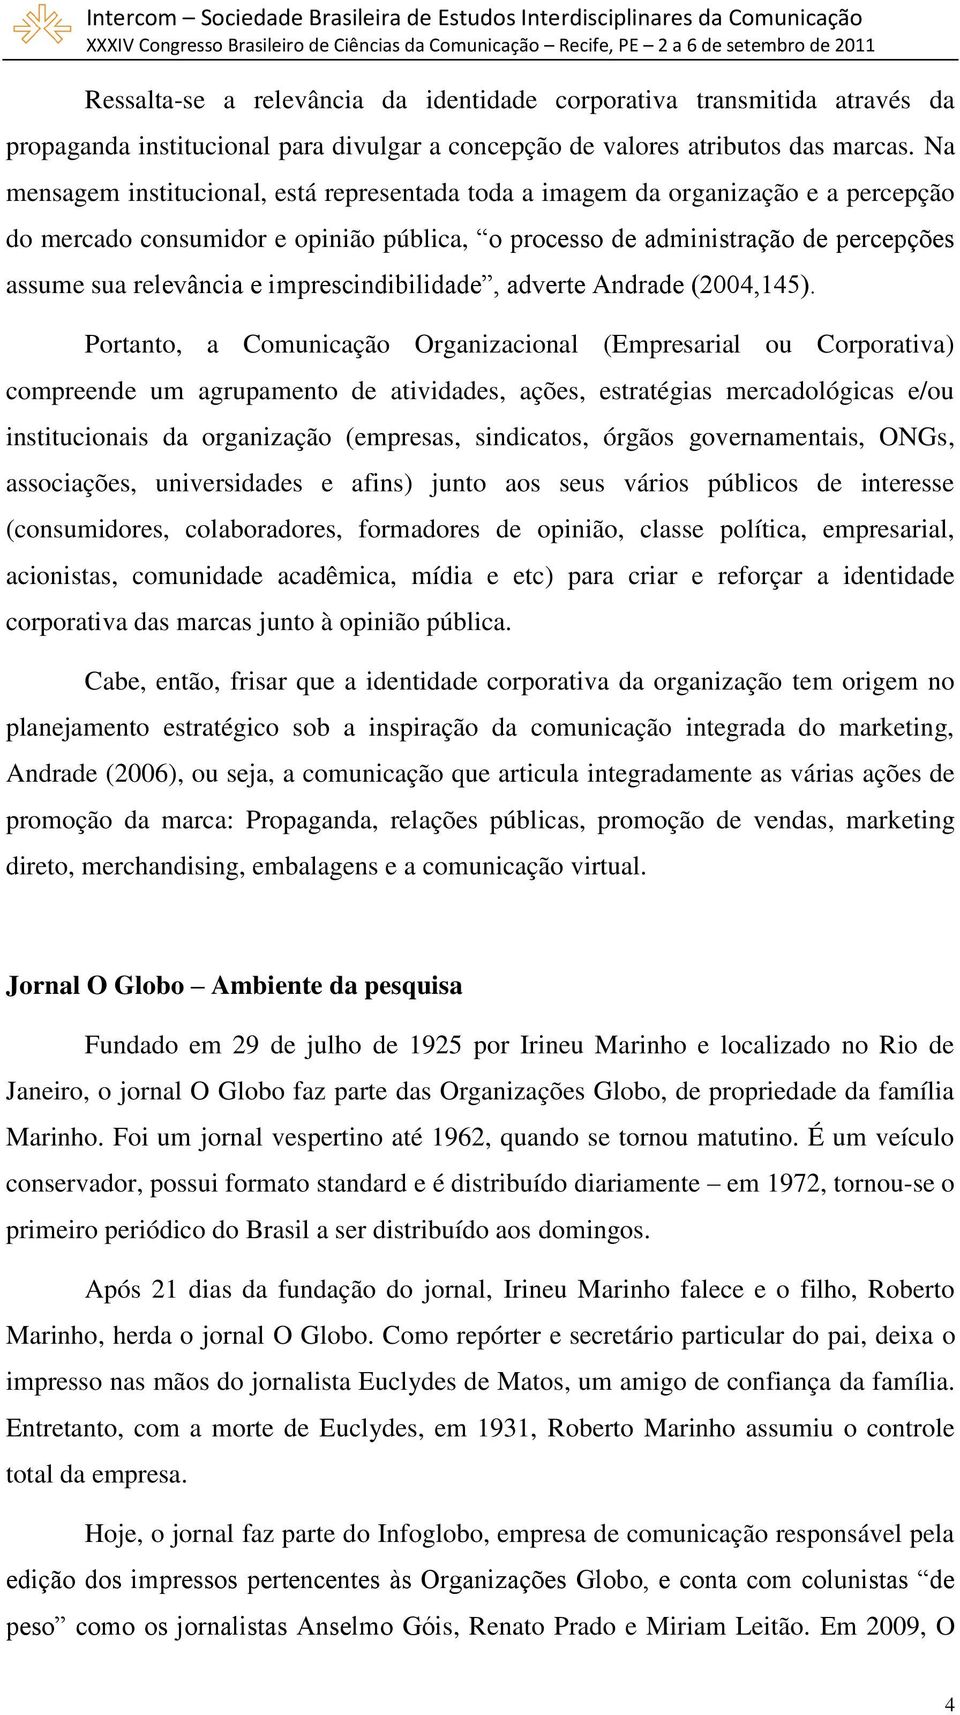 imprescindibilidade, adverte Andrade (2004,145).